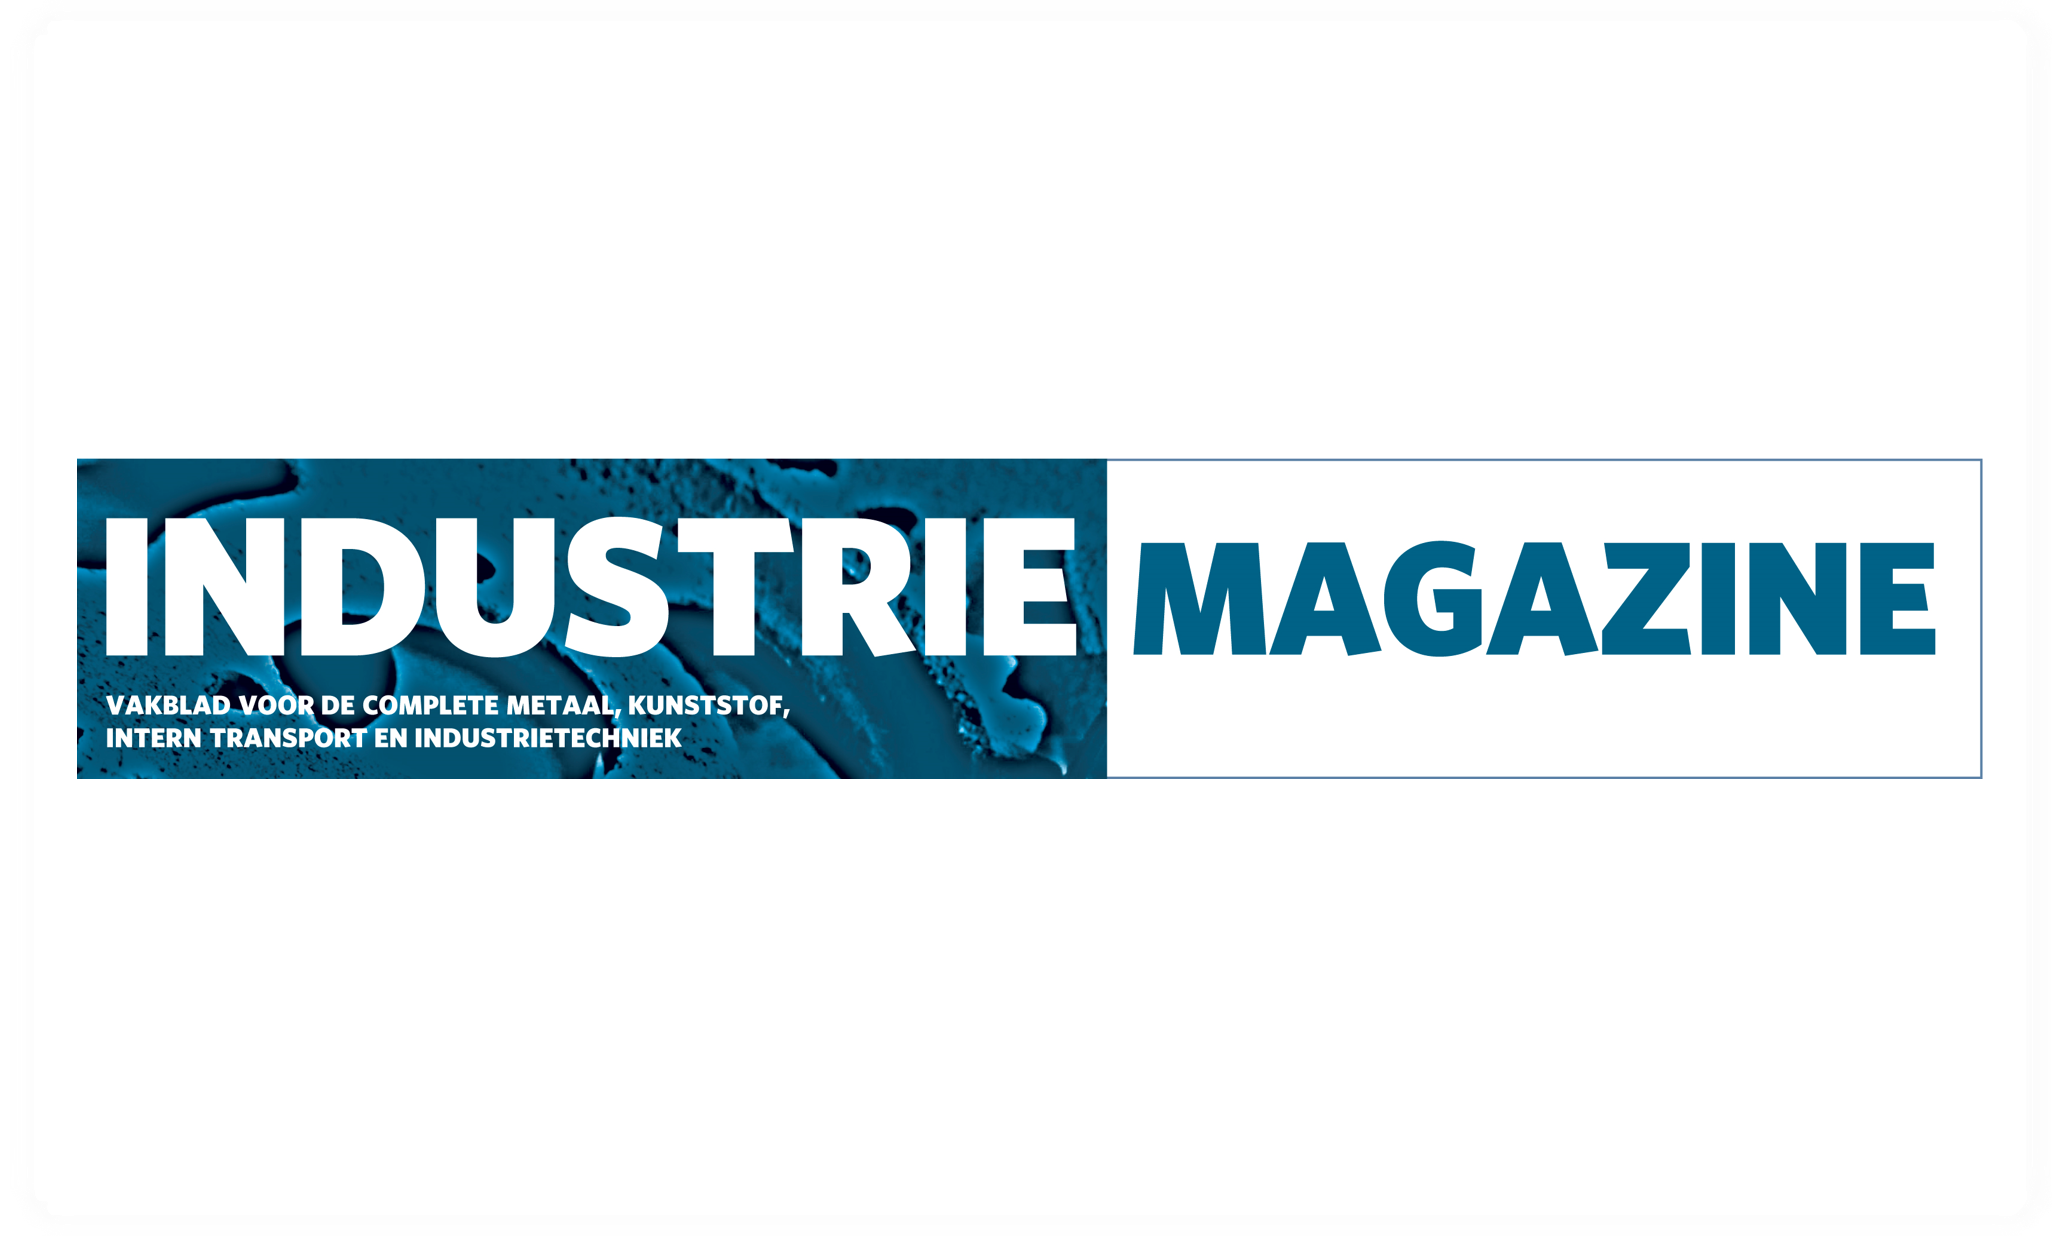 Industrie magazine